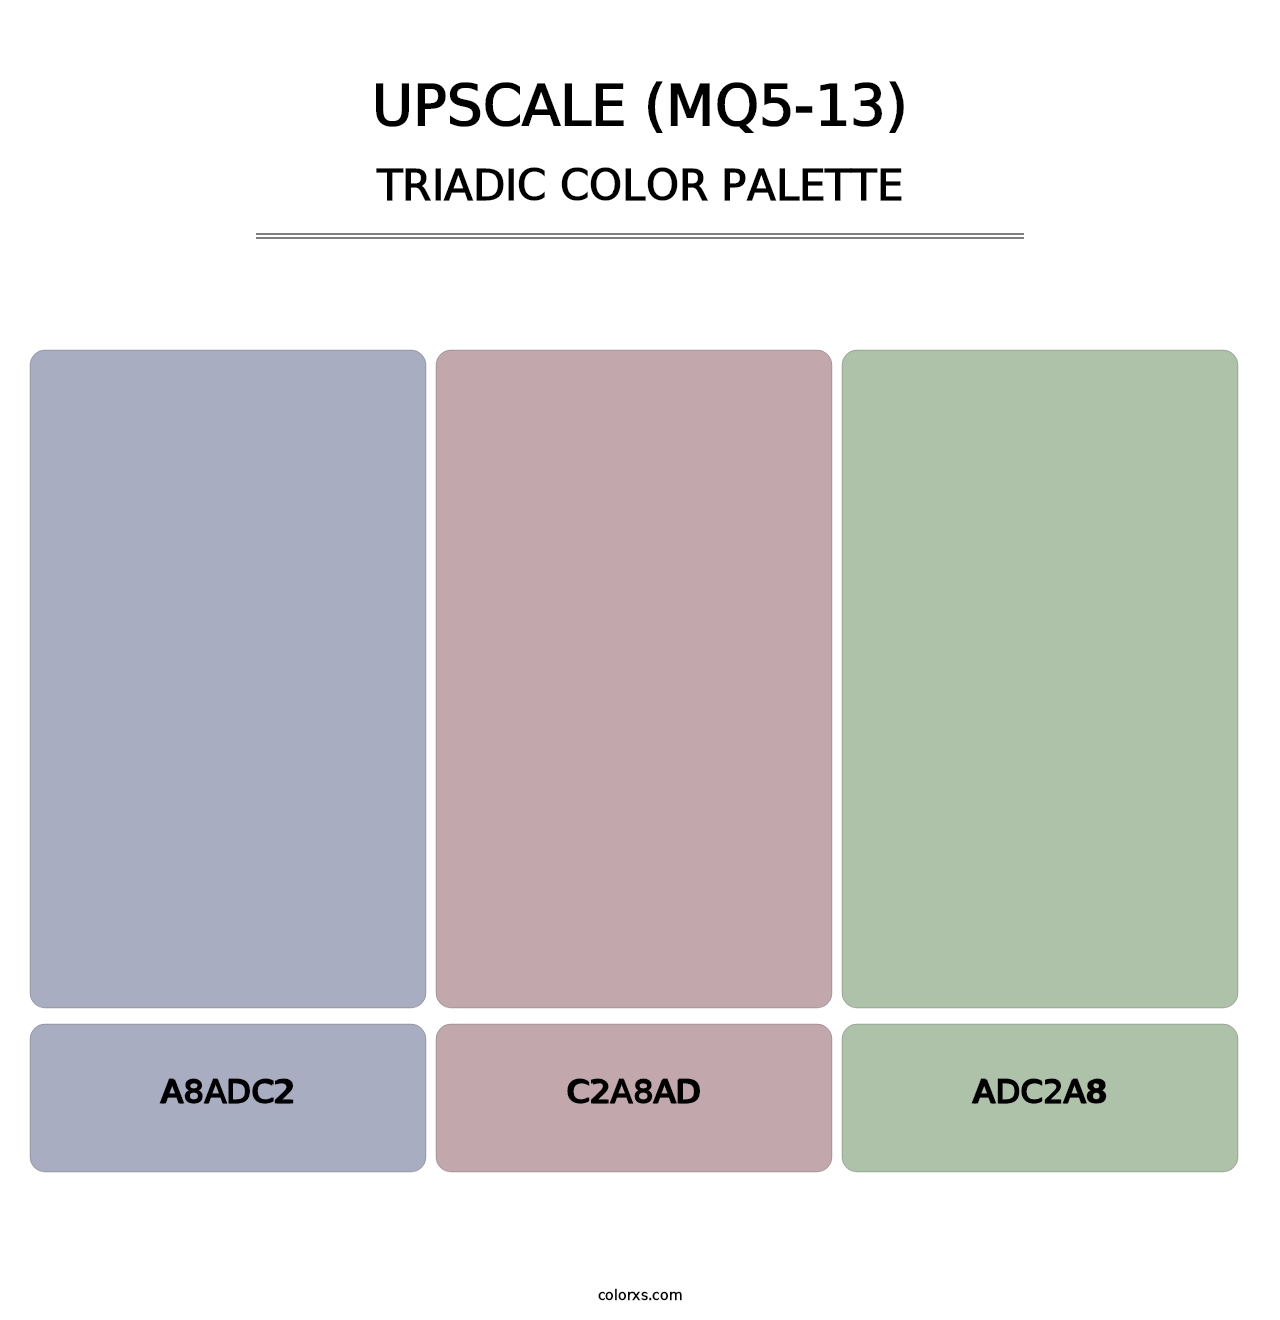 Upscale (MQ5-13) - Triadic Color Palette